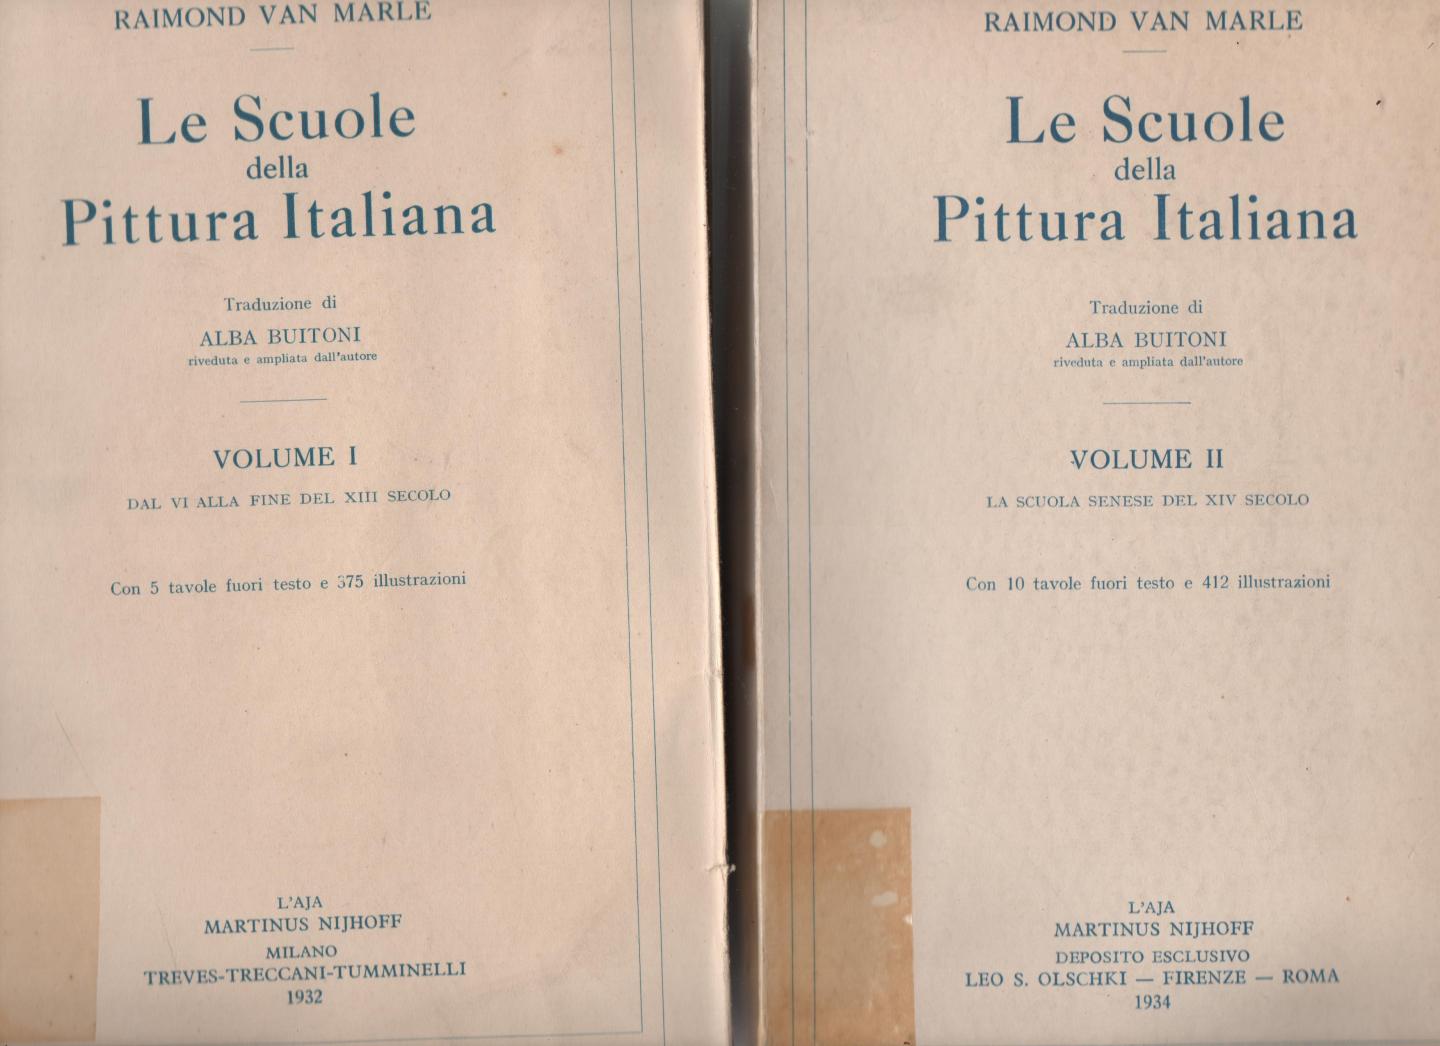 Marle, Raimond van. - Le Scuole della Pittura Italiana. Volume I en Volume II